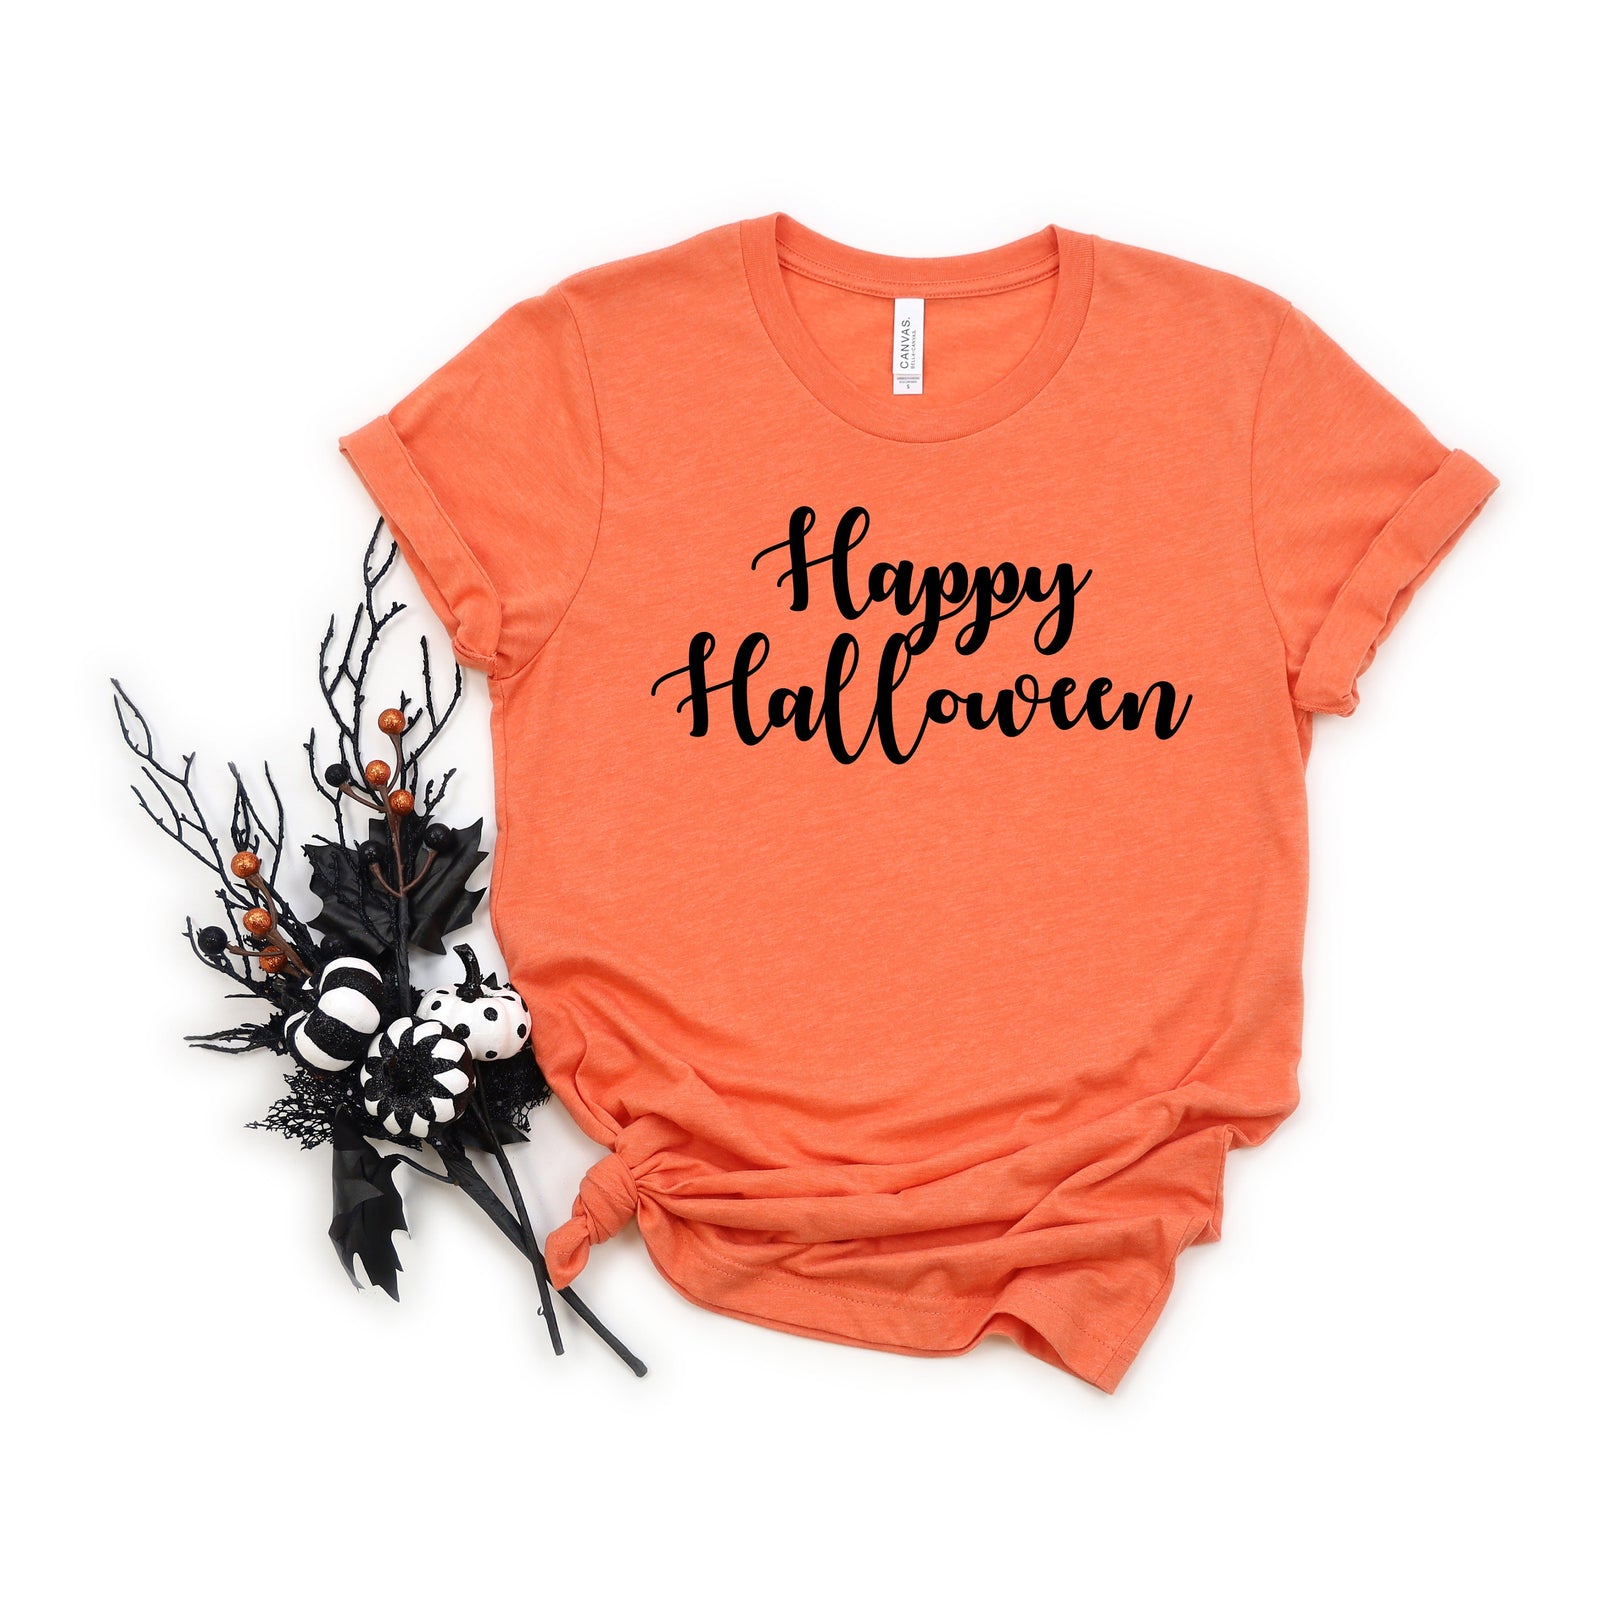 Happy Halloween Adult T Shirt - Halloween - Office - School - Funny T Shirt